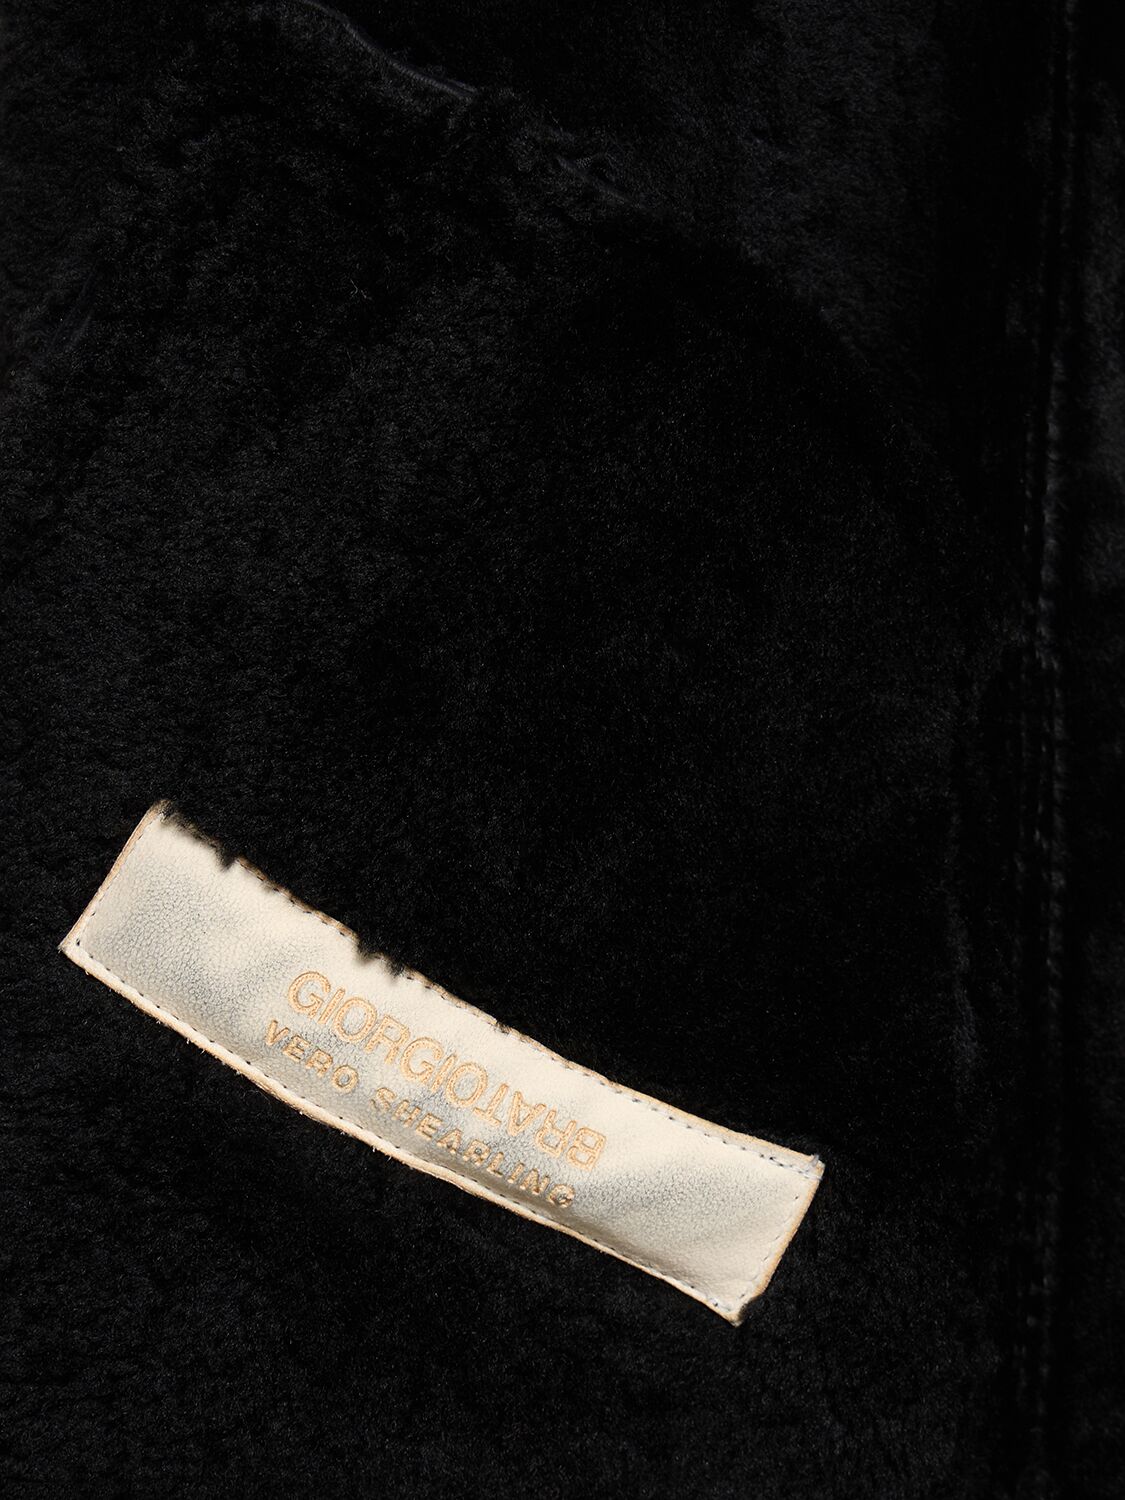 Shop Giorgio Brato Waxed Curly Shearling Jacket In Black